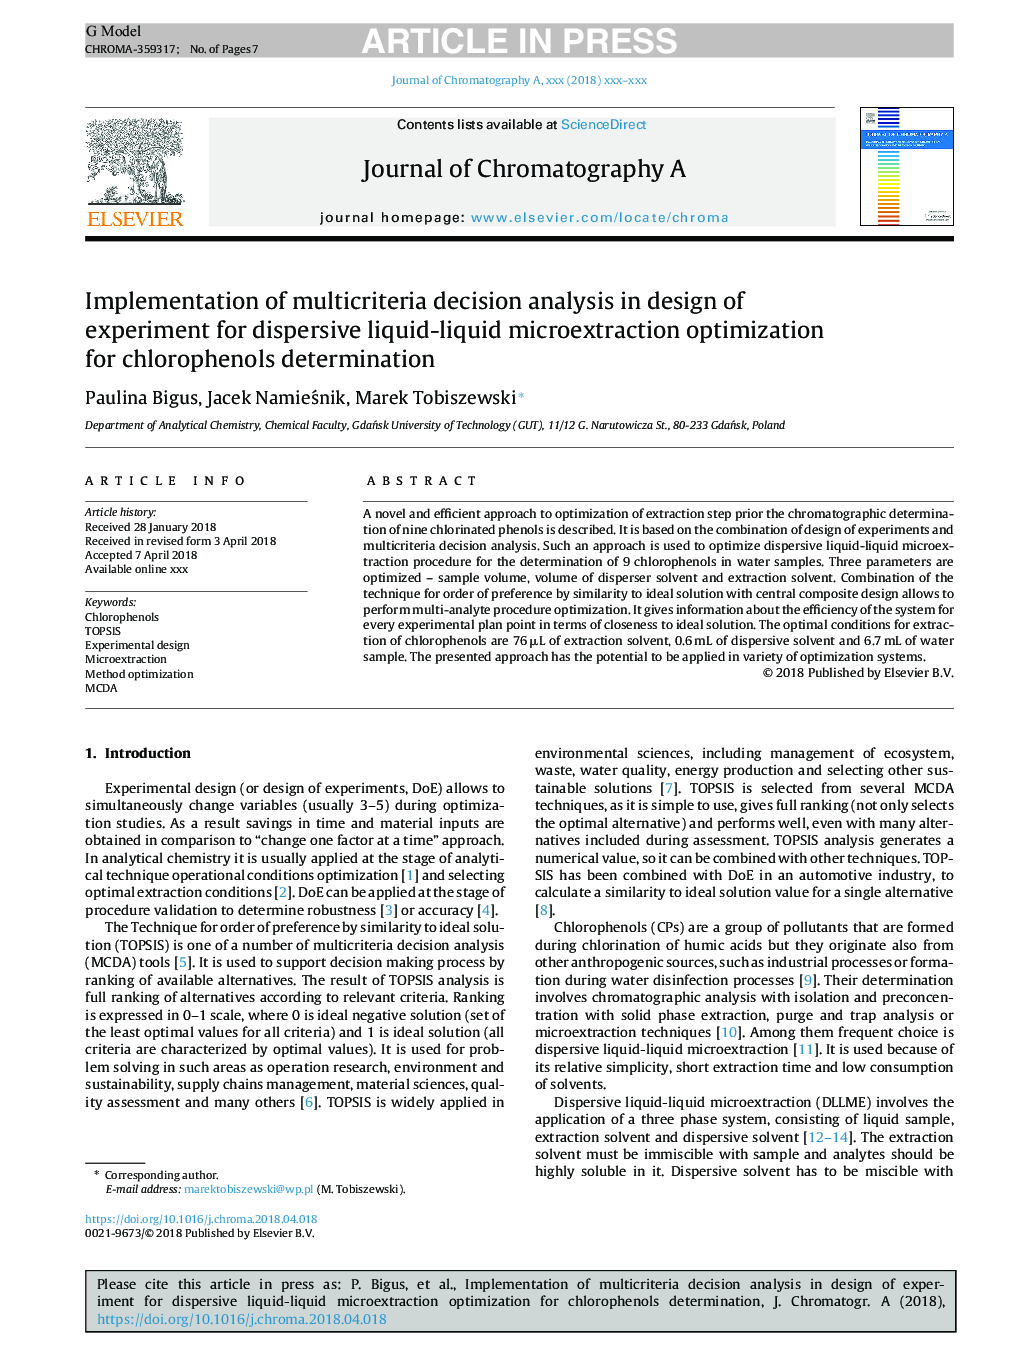 Implementation of multicriteria decision analysis in design of experiment for dispersive liquid-liquid microextraction optimization for chlorophenols determination